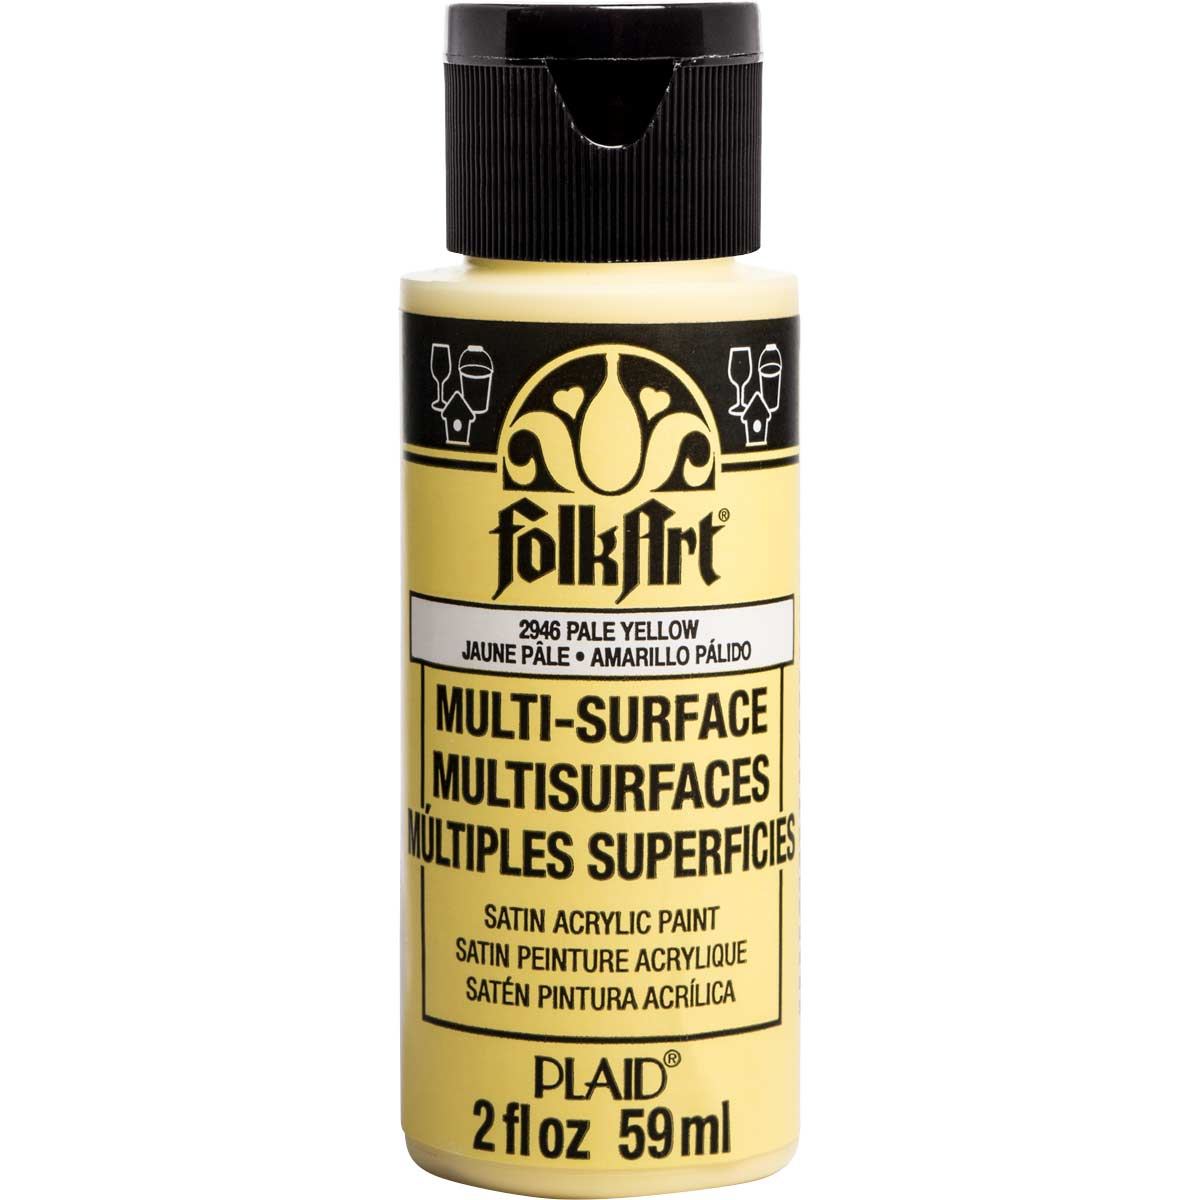 FolkArt ® Multi-Surface Satin Acrylic Paints - Pale Yellow, 2 oz. - 2946